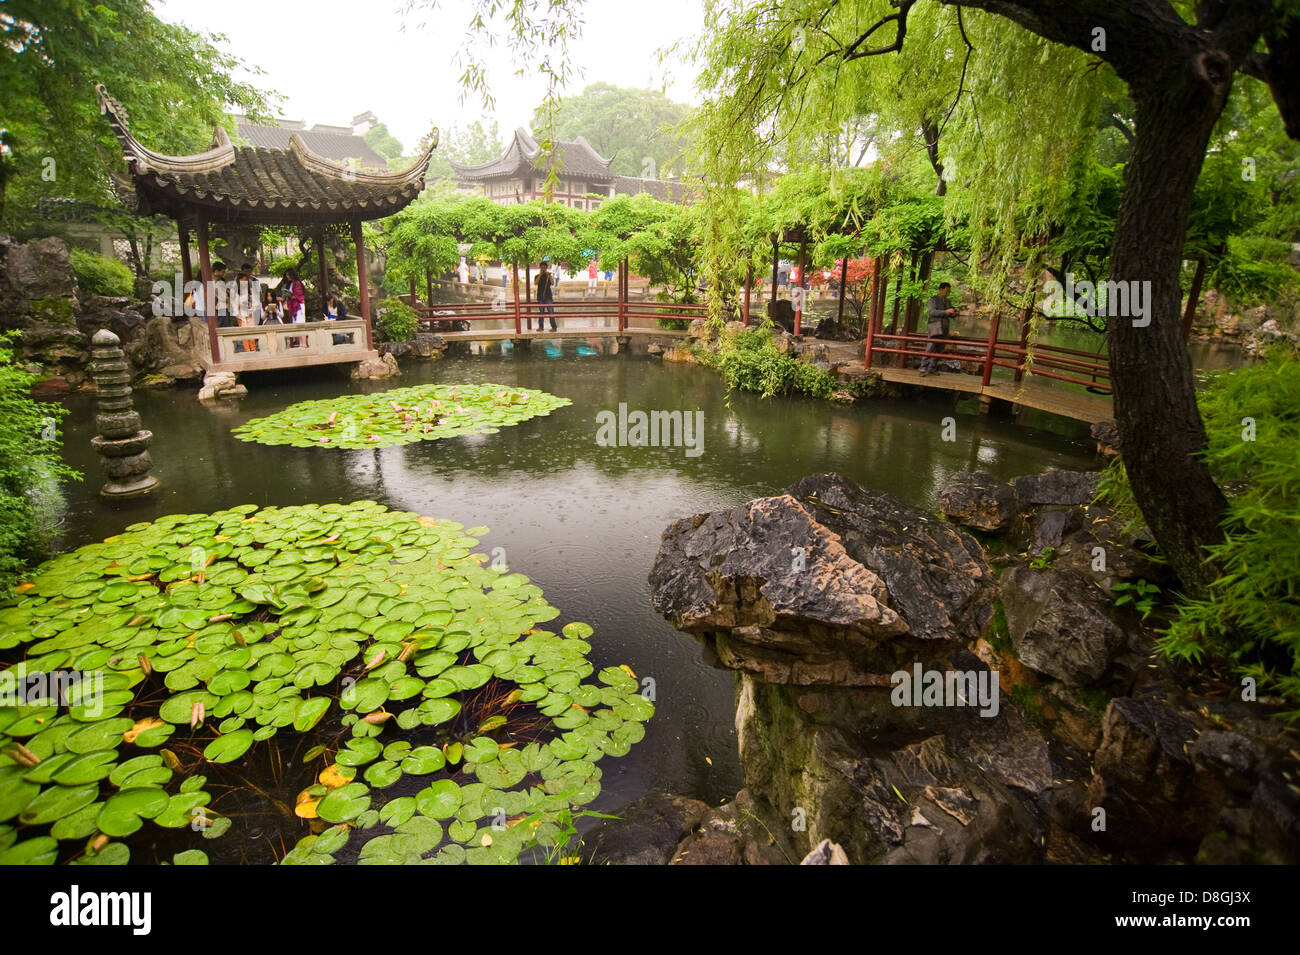 The famous Lingering Garden of Suzhou, China Stock Photo: 56913806 - Alamy